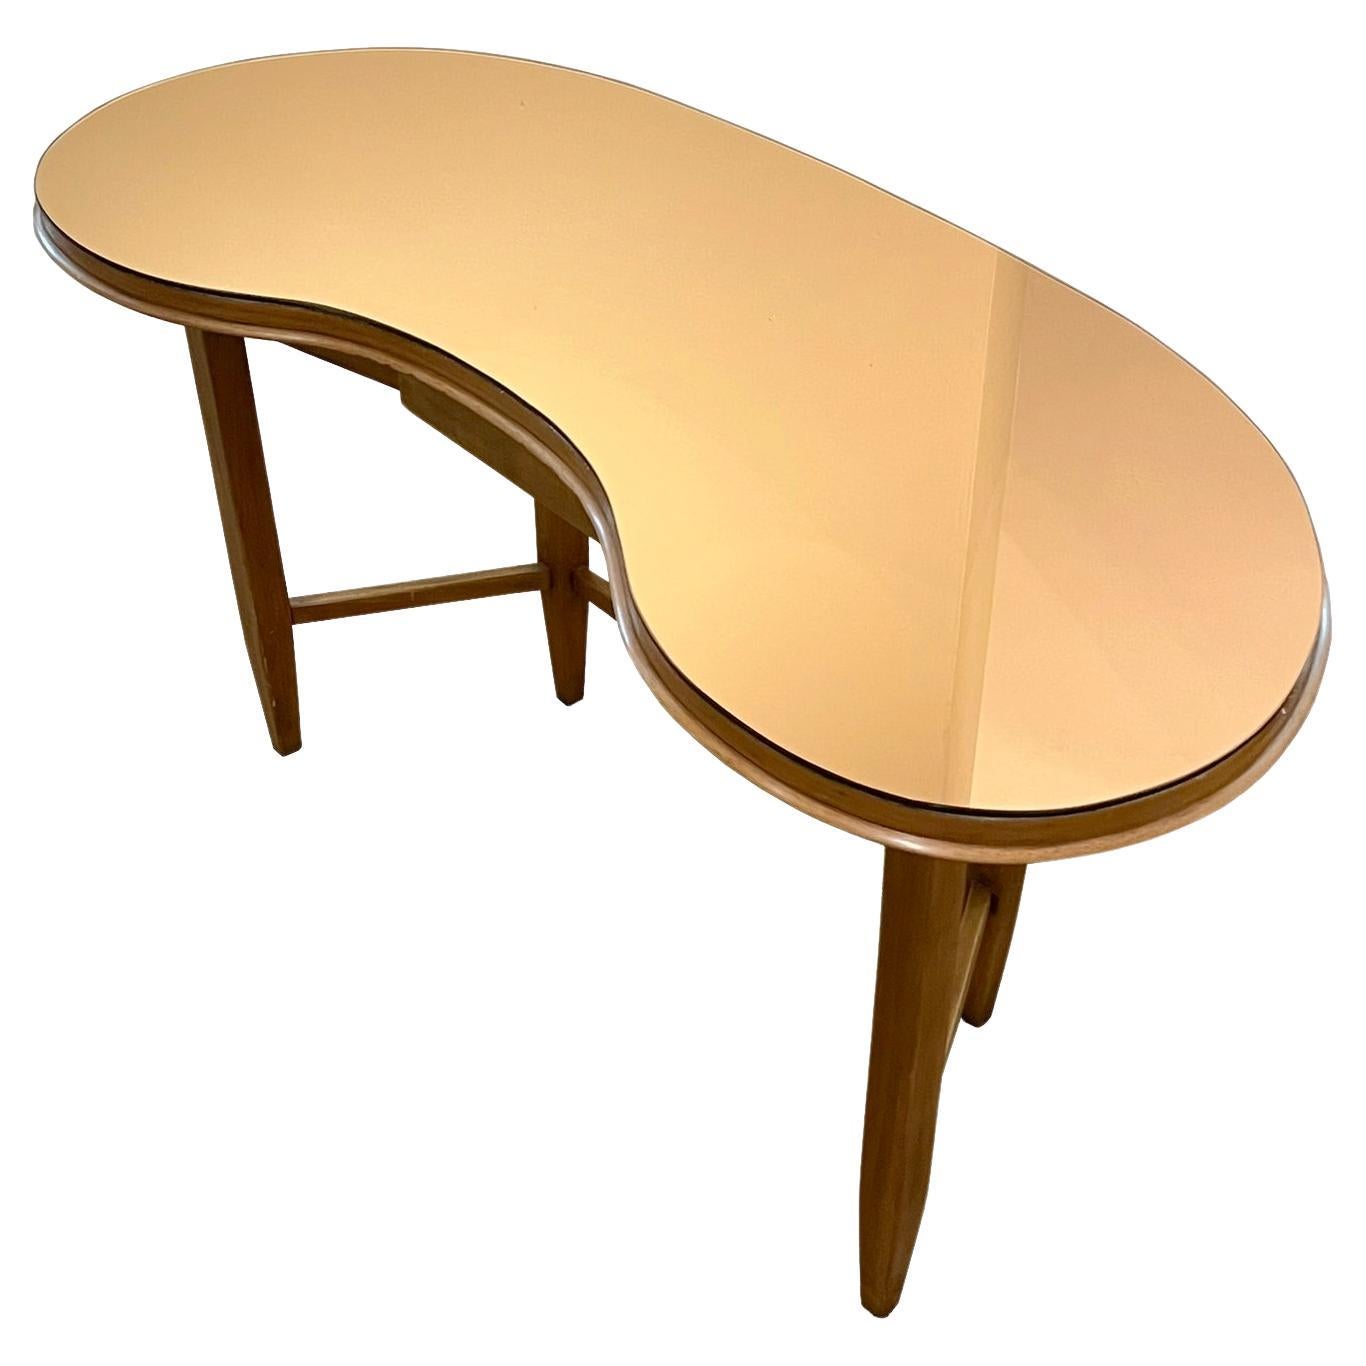 A Gio Ponti Console table in walnut and copper colored glass